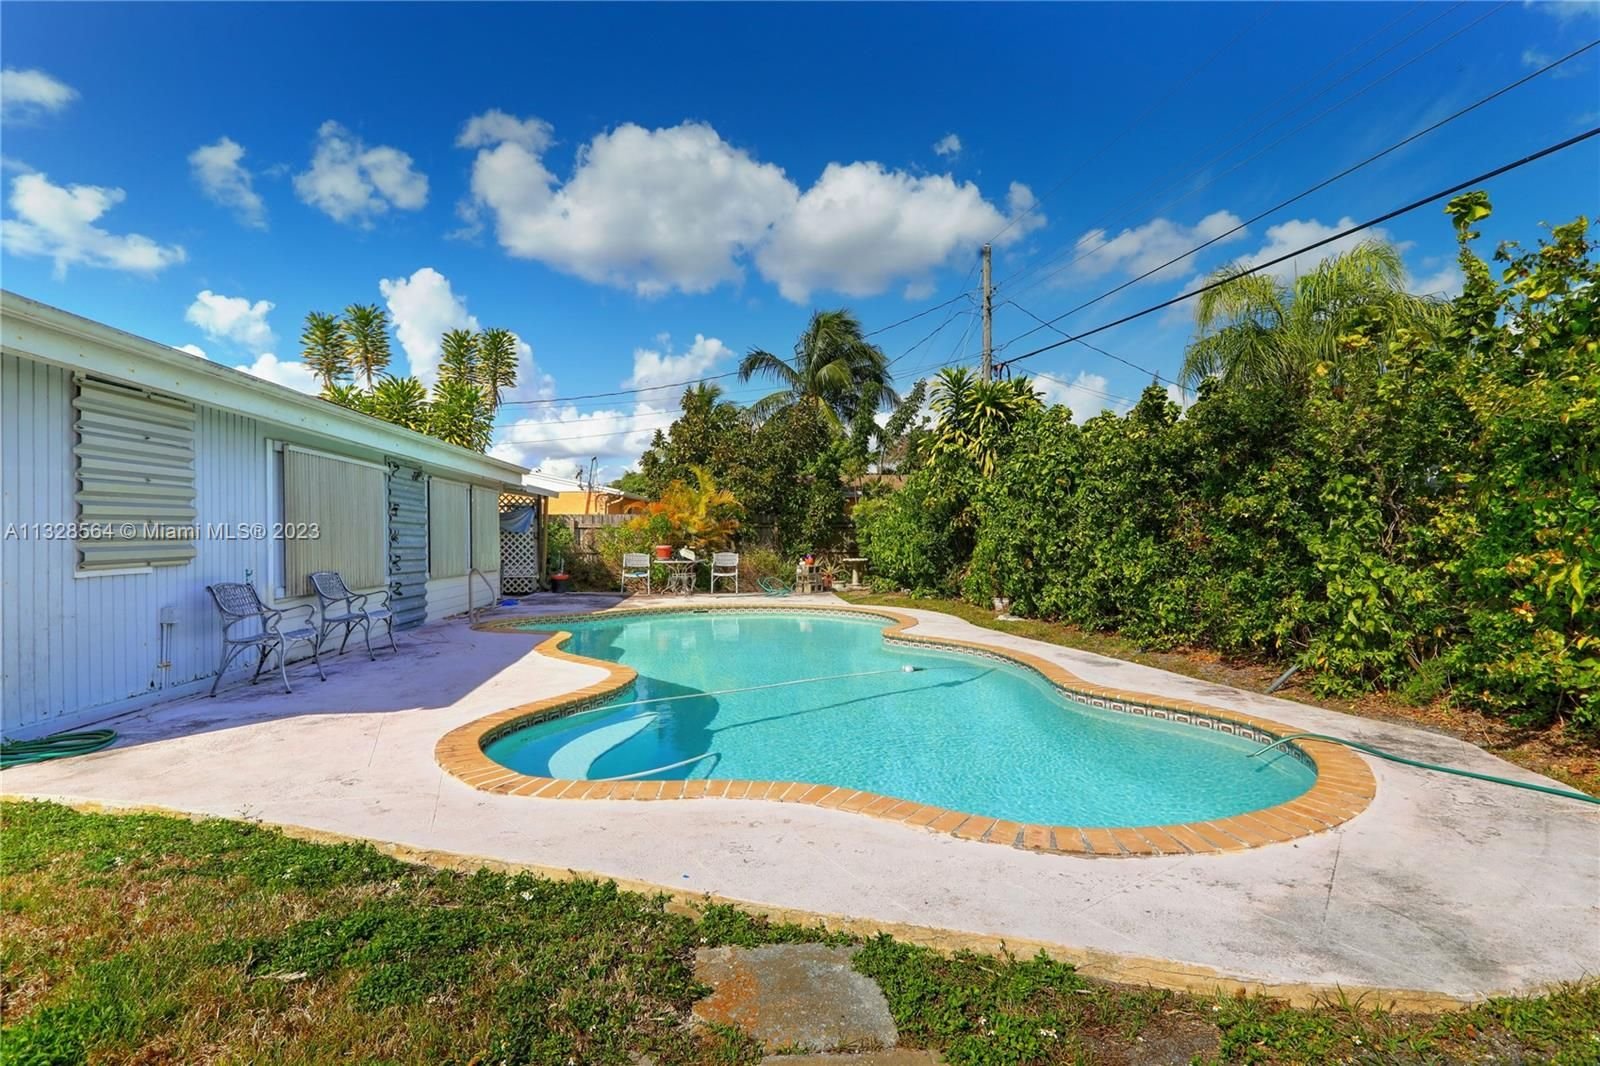 Real estate property located at 20531 116th Rd, Miami-Dade County, Miami, FL